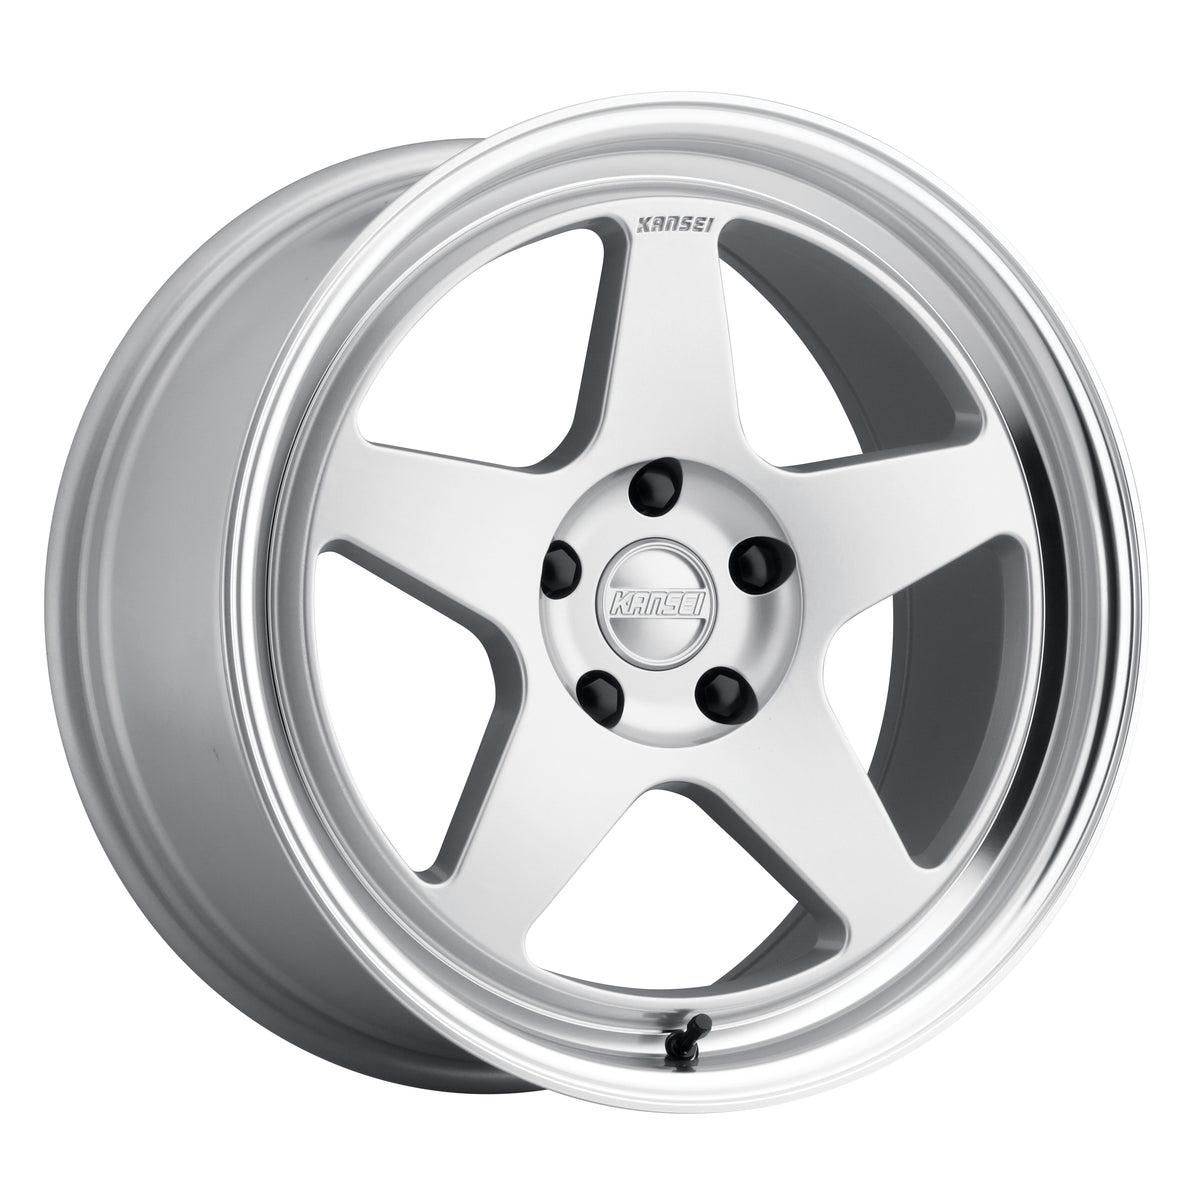 K12H KNP Wheel, Size: 18" x 8.50", Bolt Pattern: 5 x 108 mm, Backspace: 6.13" [Finish: Hyper Silver]